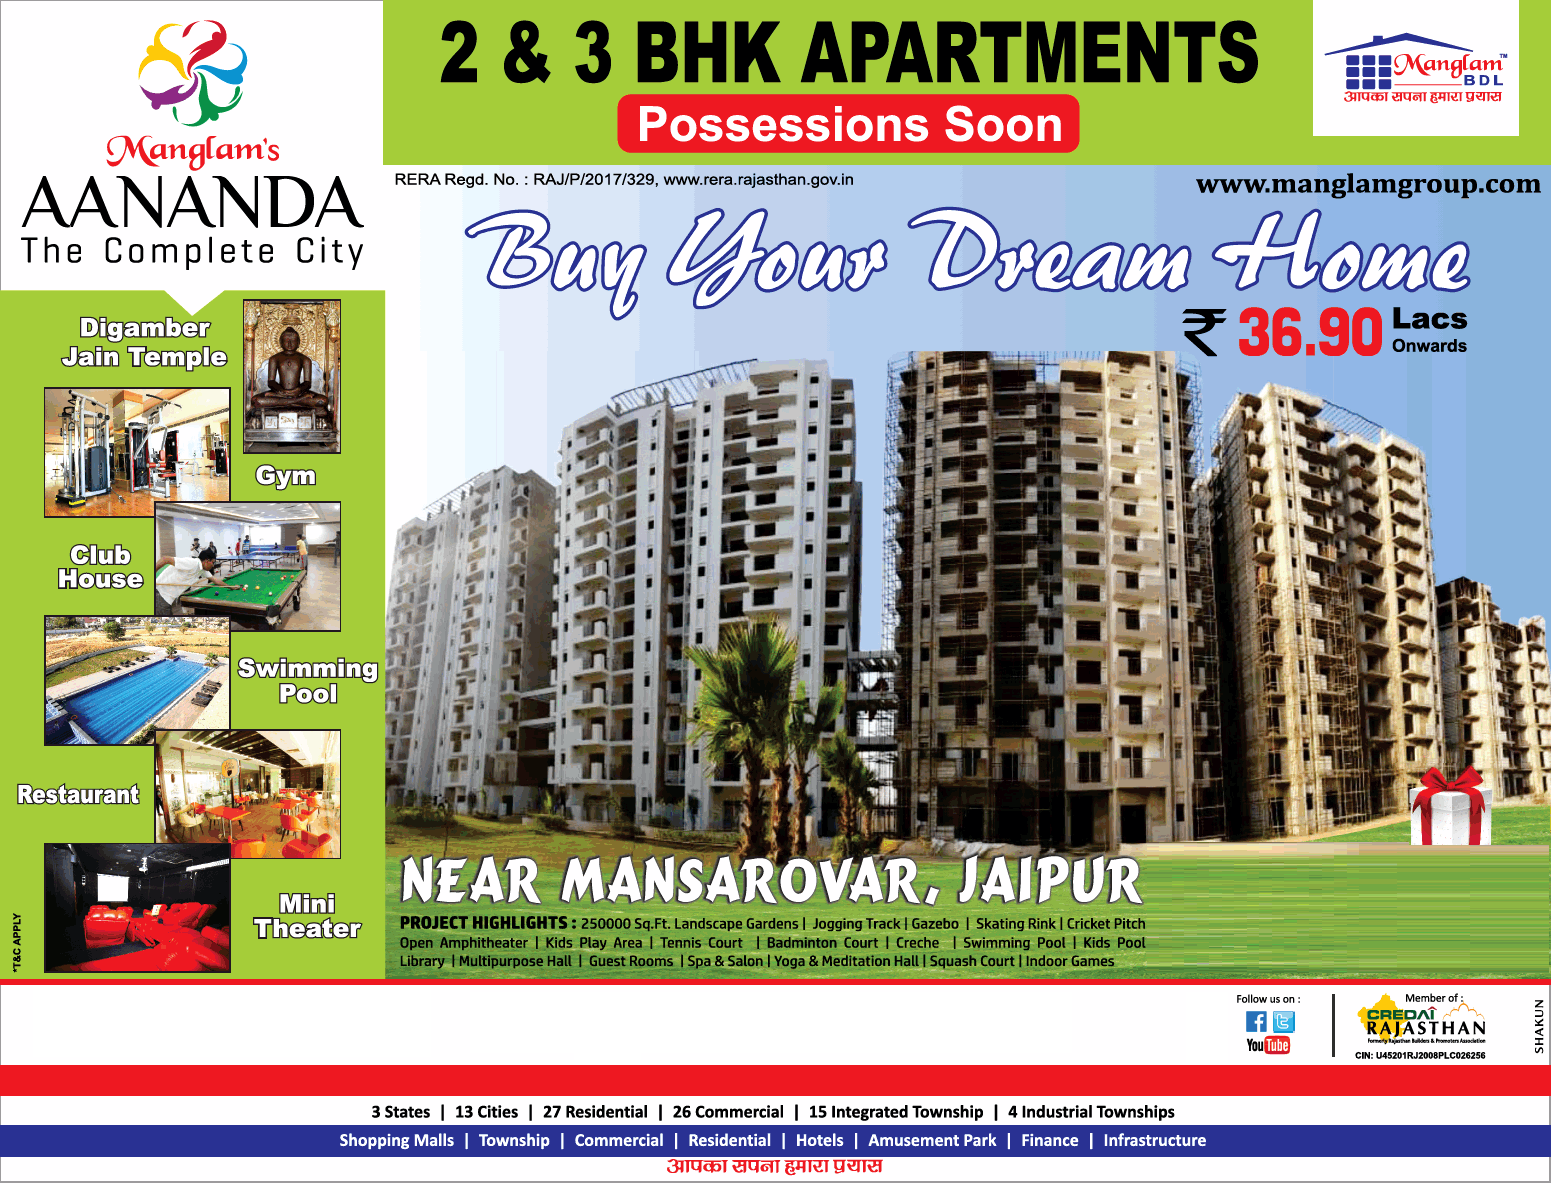 Book 2 & 3 bhk apartments at Rs. 36.90 lakhs at Manglam Aananda in Jaipur Update